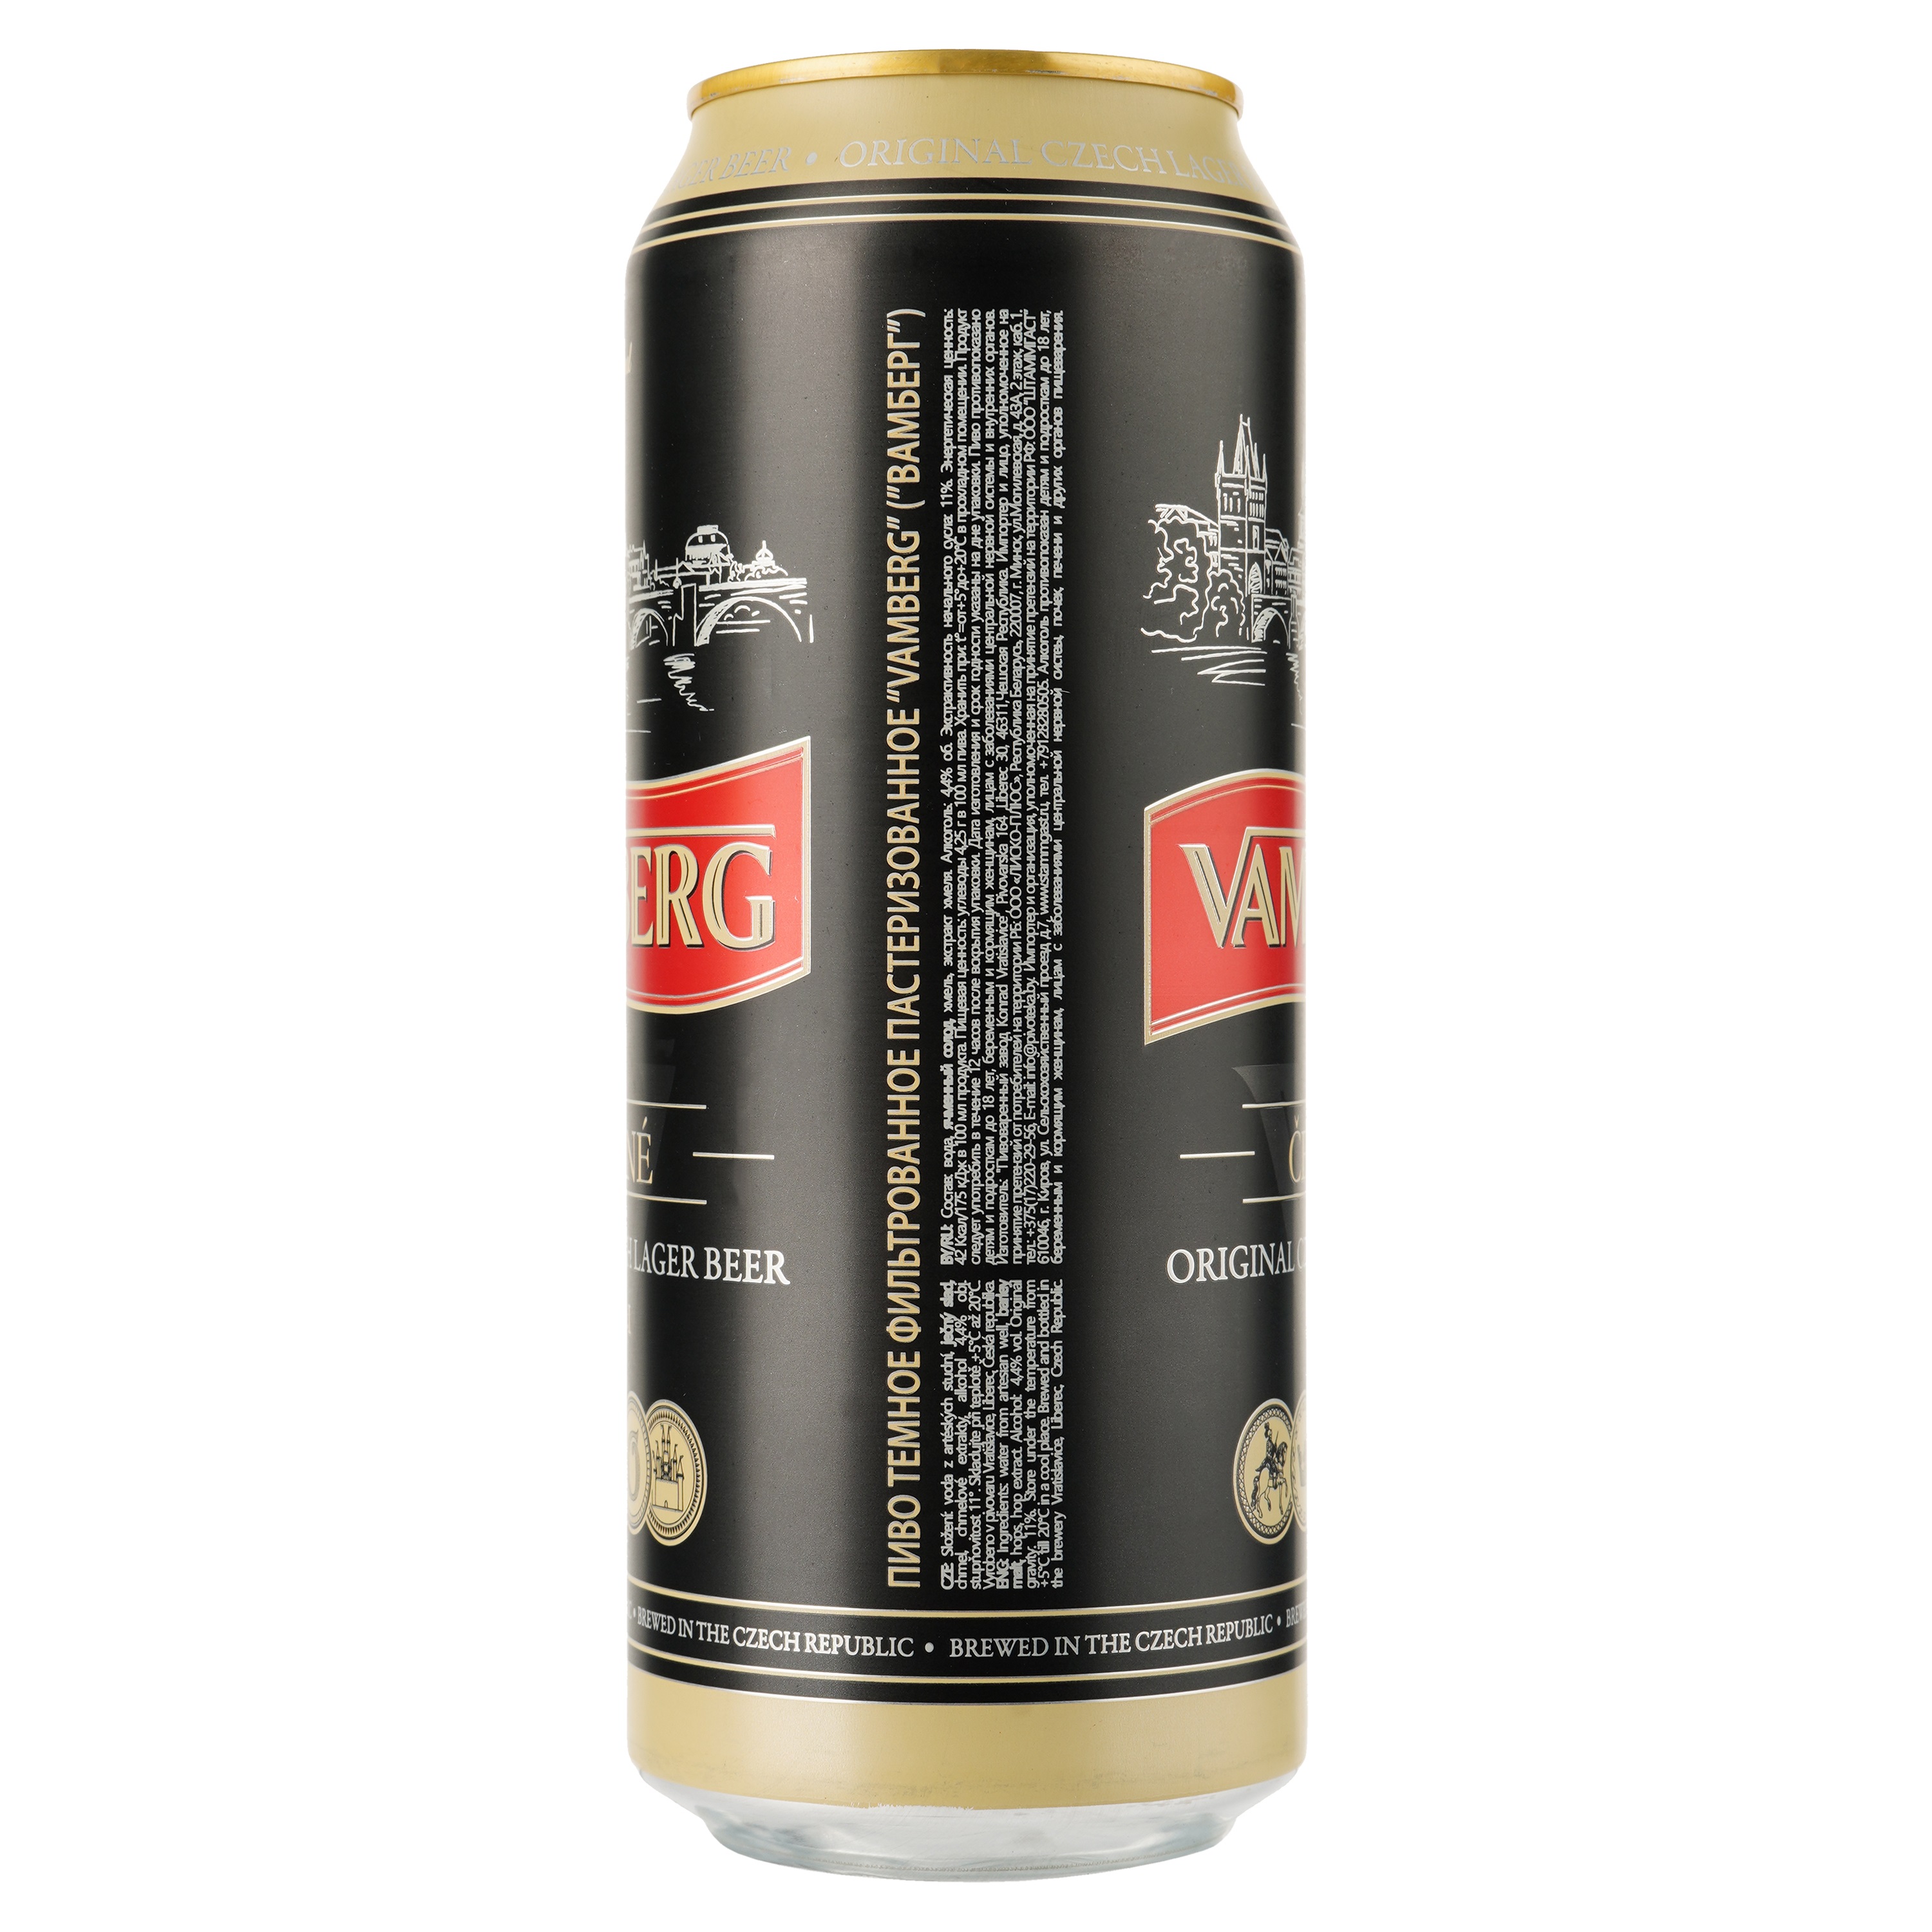 Пиво Vamberg Dark Lager, темное, фильтрованное, 4,4%, ж/б, 0,5 л - фото 2